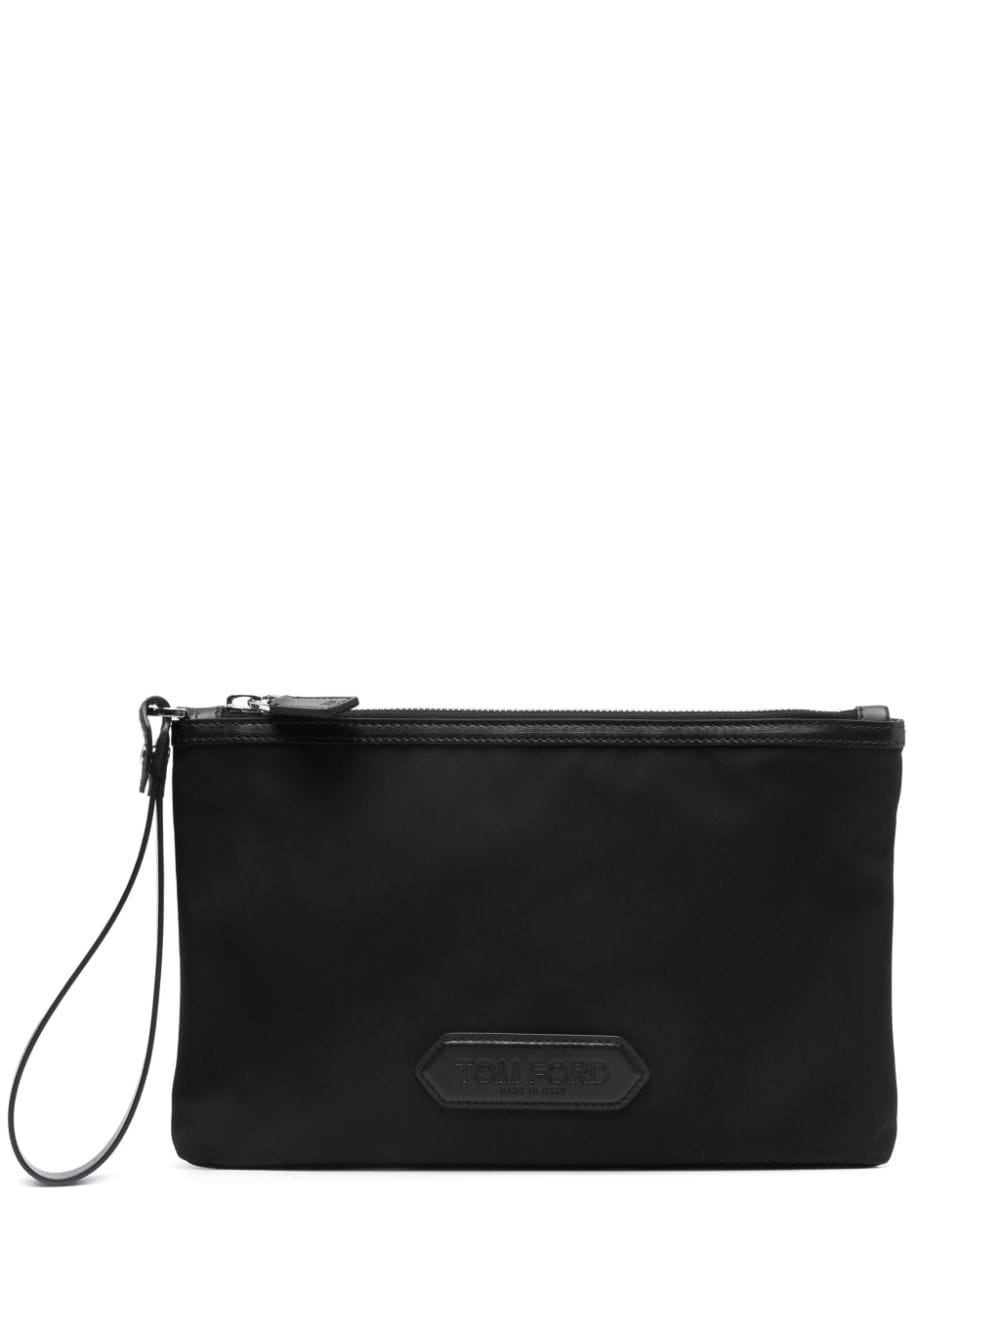 leather clutch bag - 1